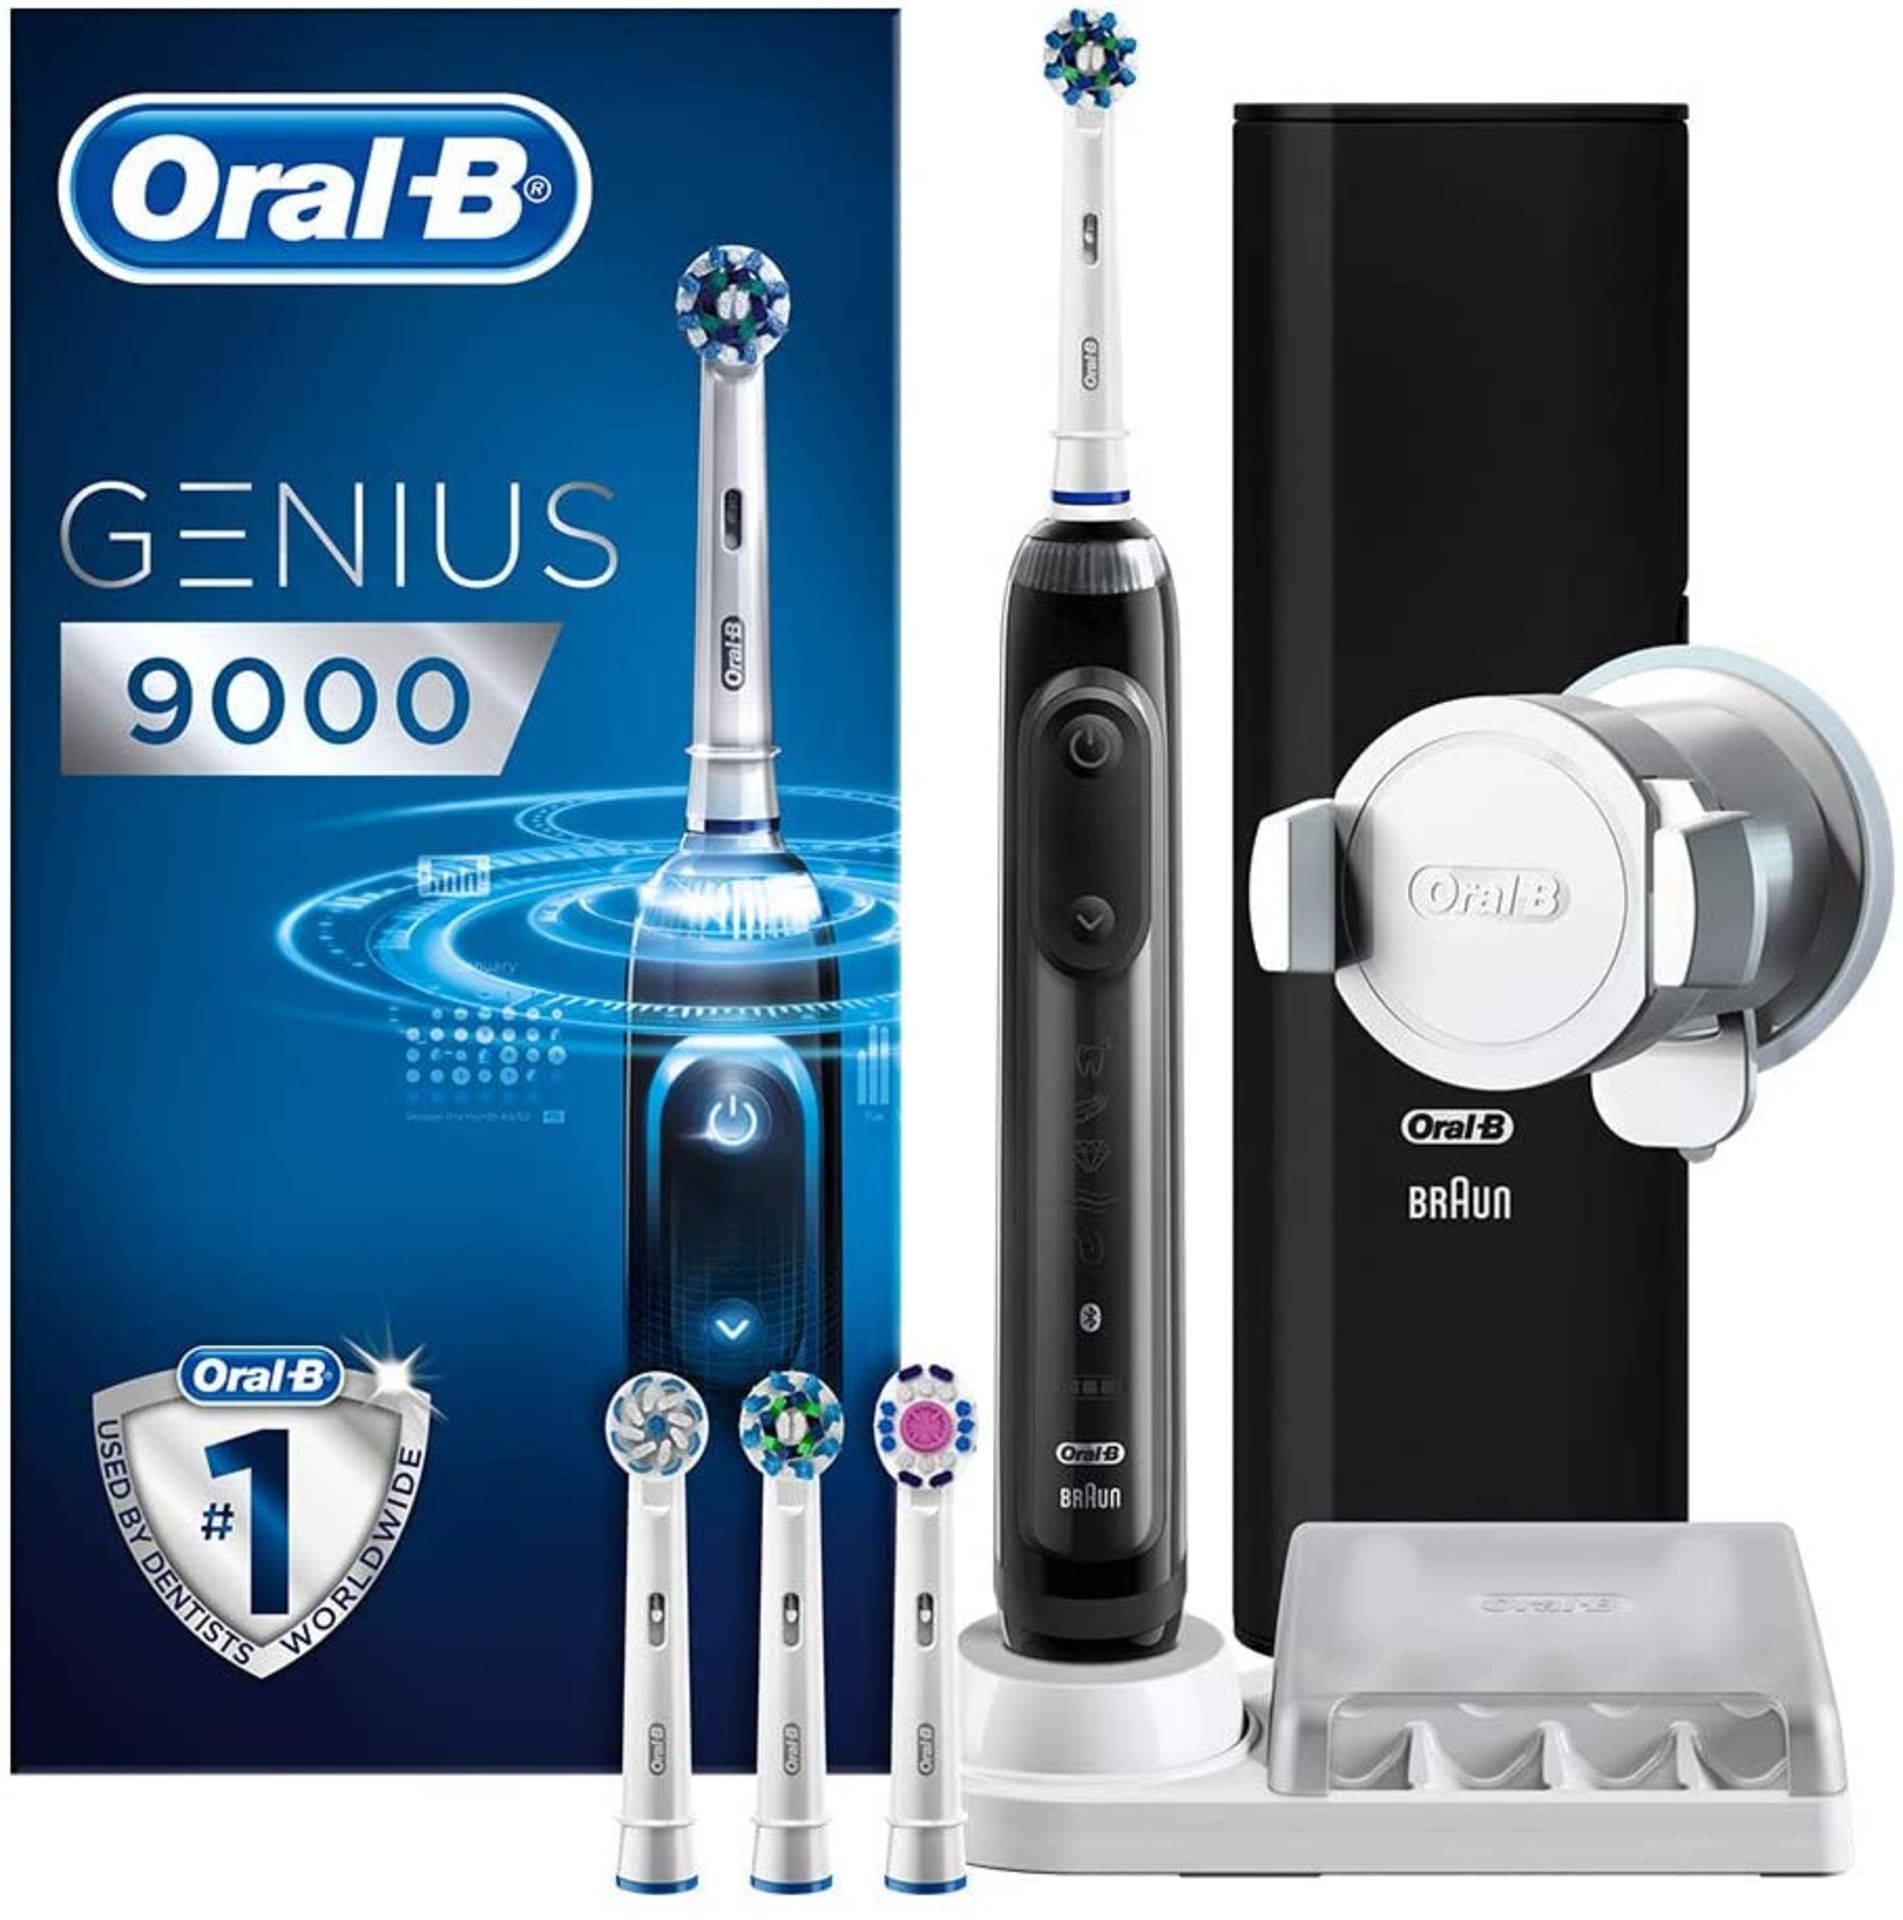 Oral-B Genius 9000 CrossAction Electric Toothbrush, 1 Black App Connected Handle, 6 Modes, Pressure